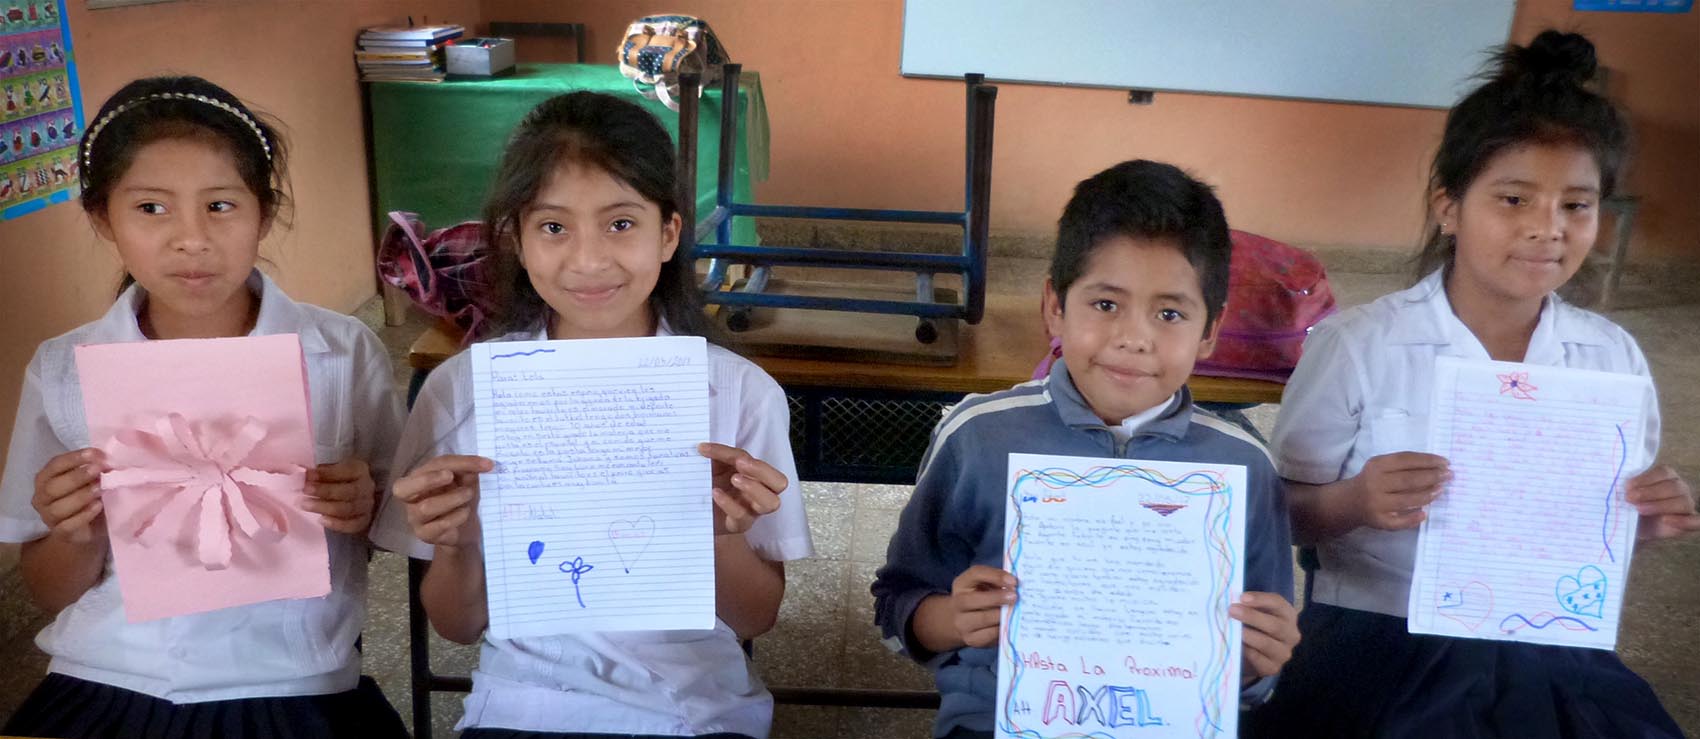 Lempira Elementary School students display their pen pal letter replies to Newtown students. (Karyn Miller-Medzon/Here & Now)